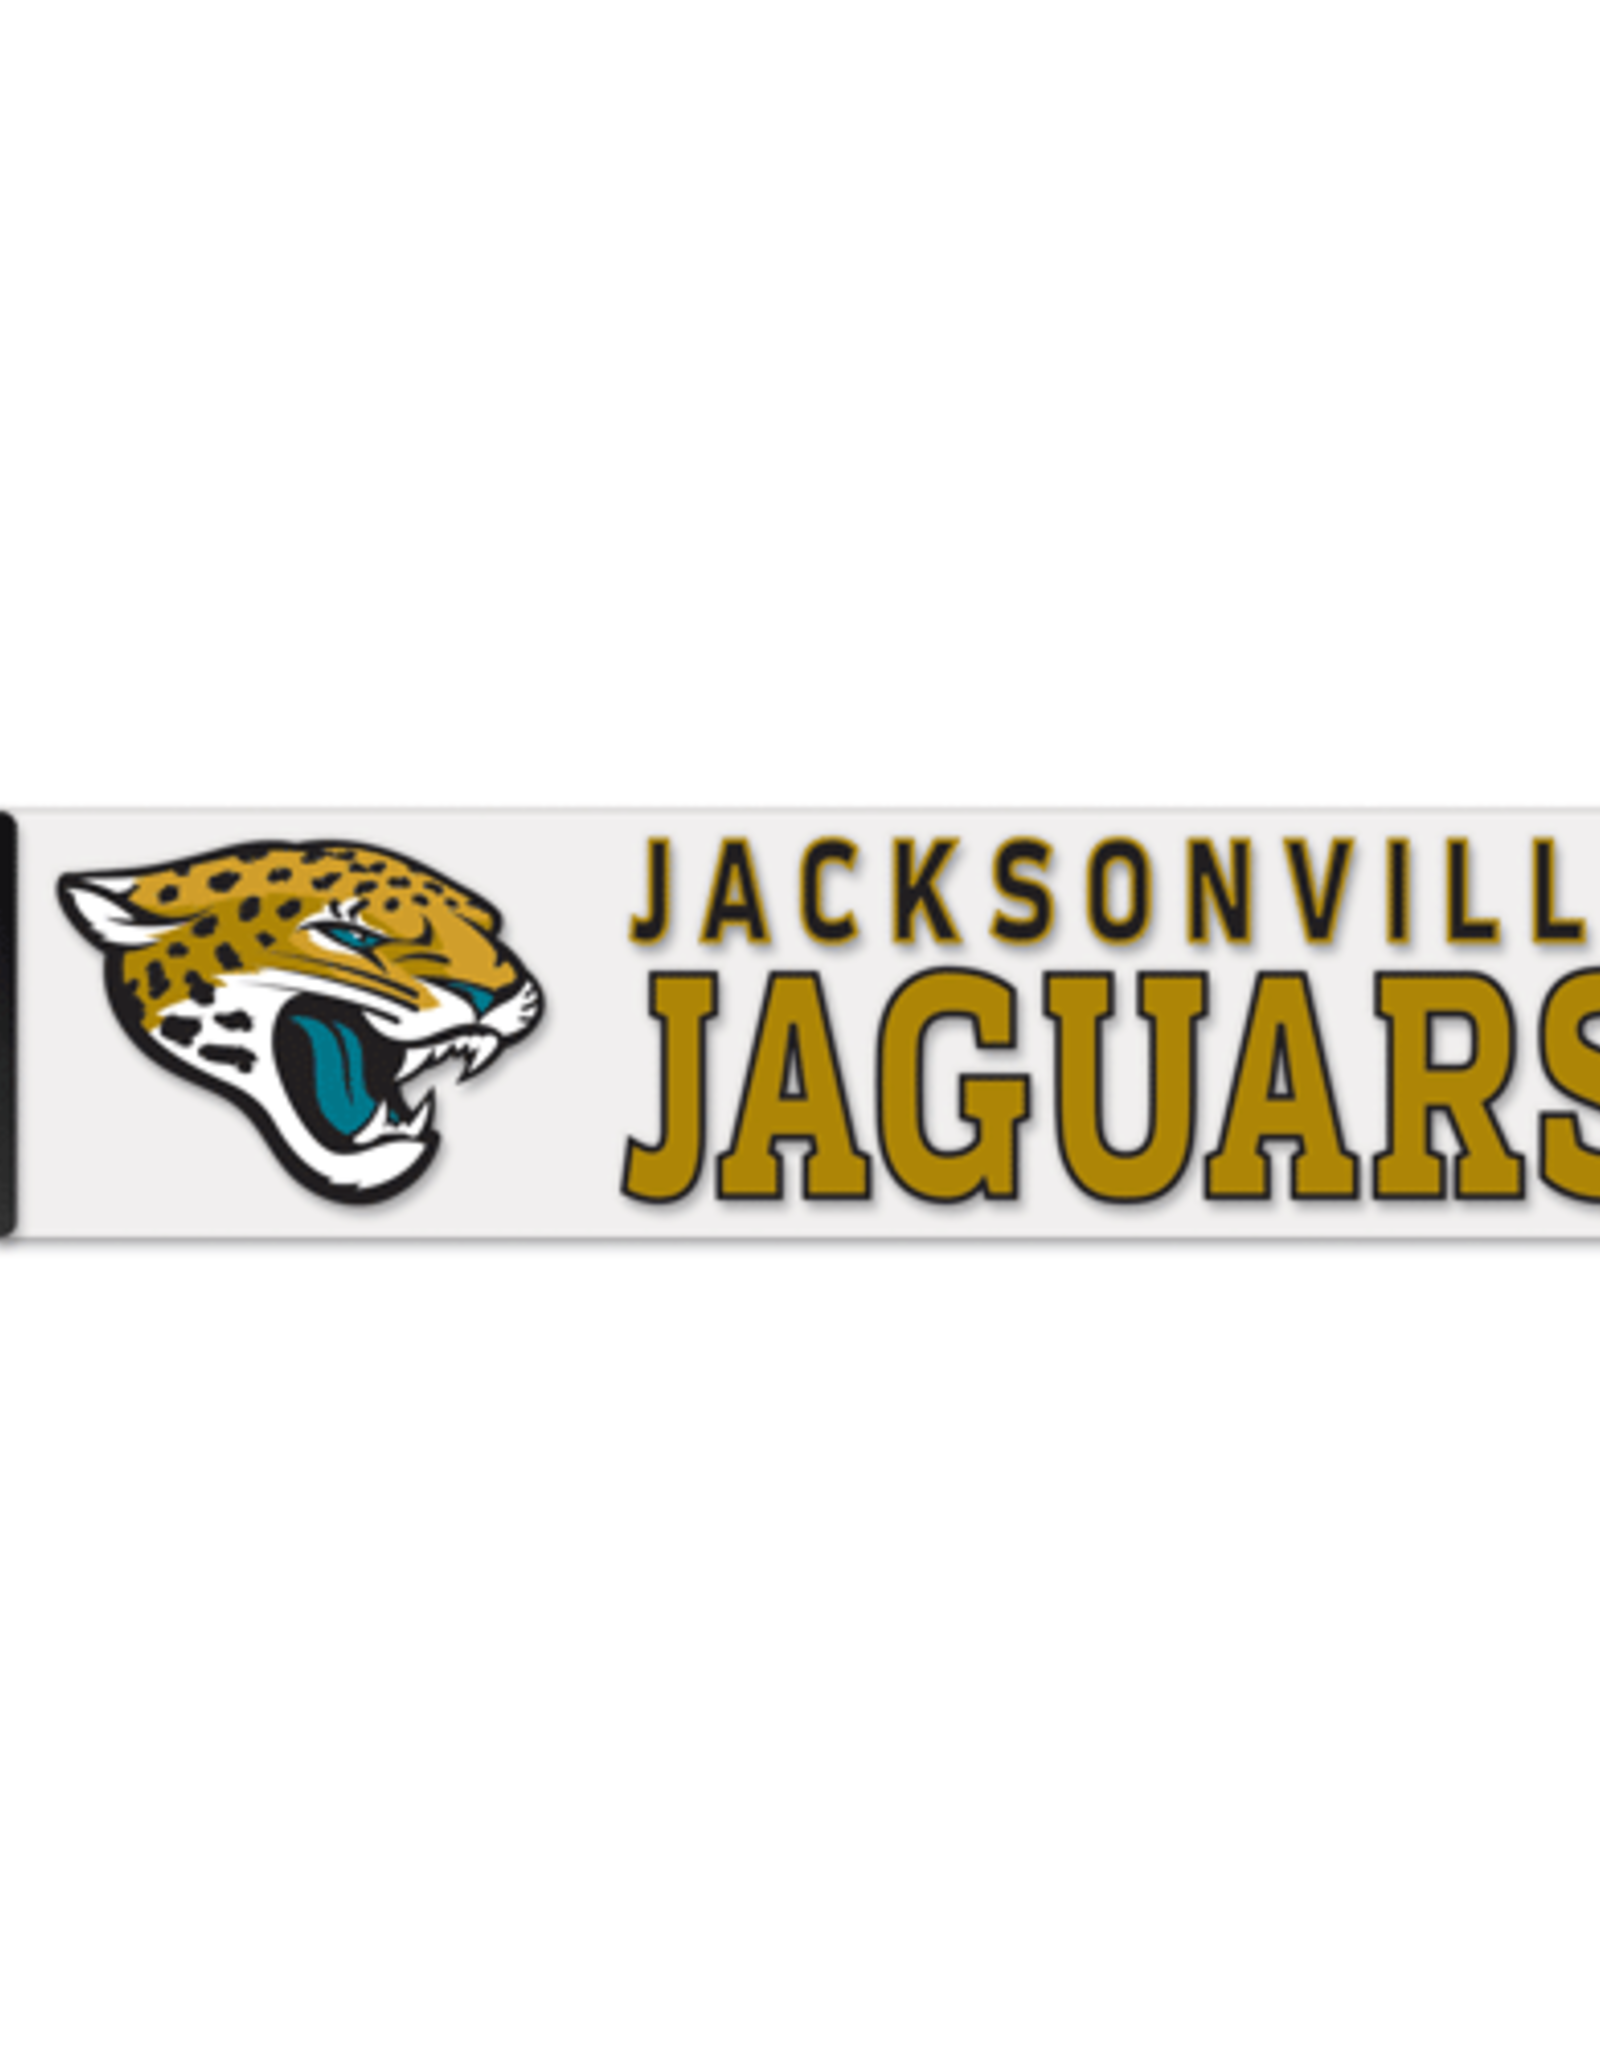 WINCRAFT Jacksonville Jaguars 4x17 Perfect Cut Decals